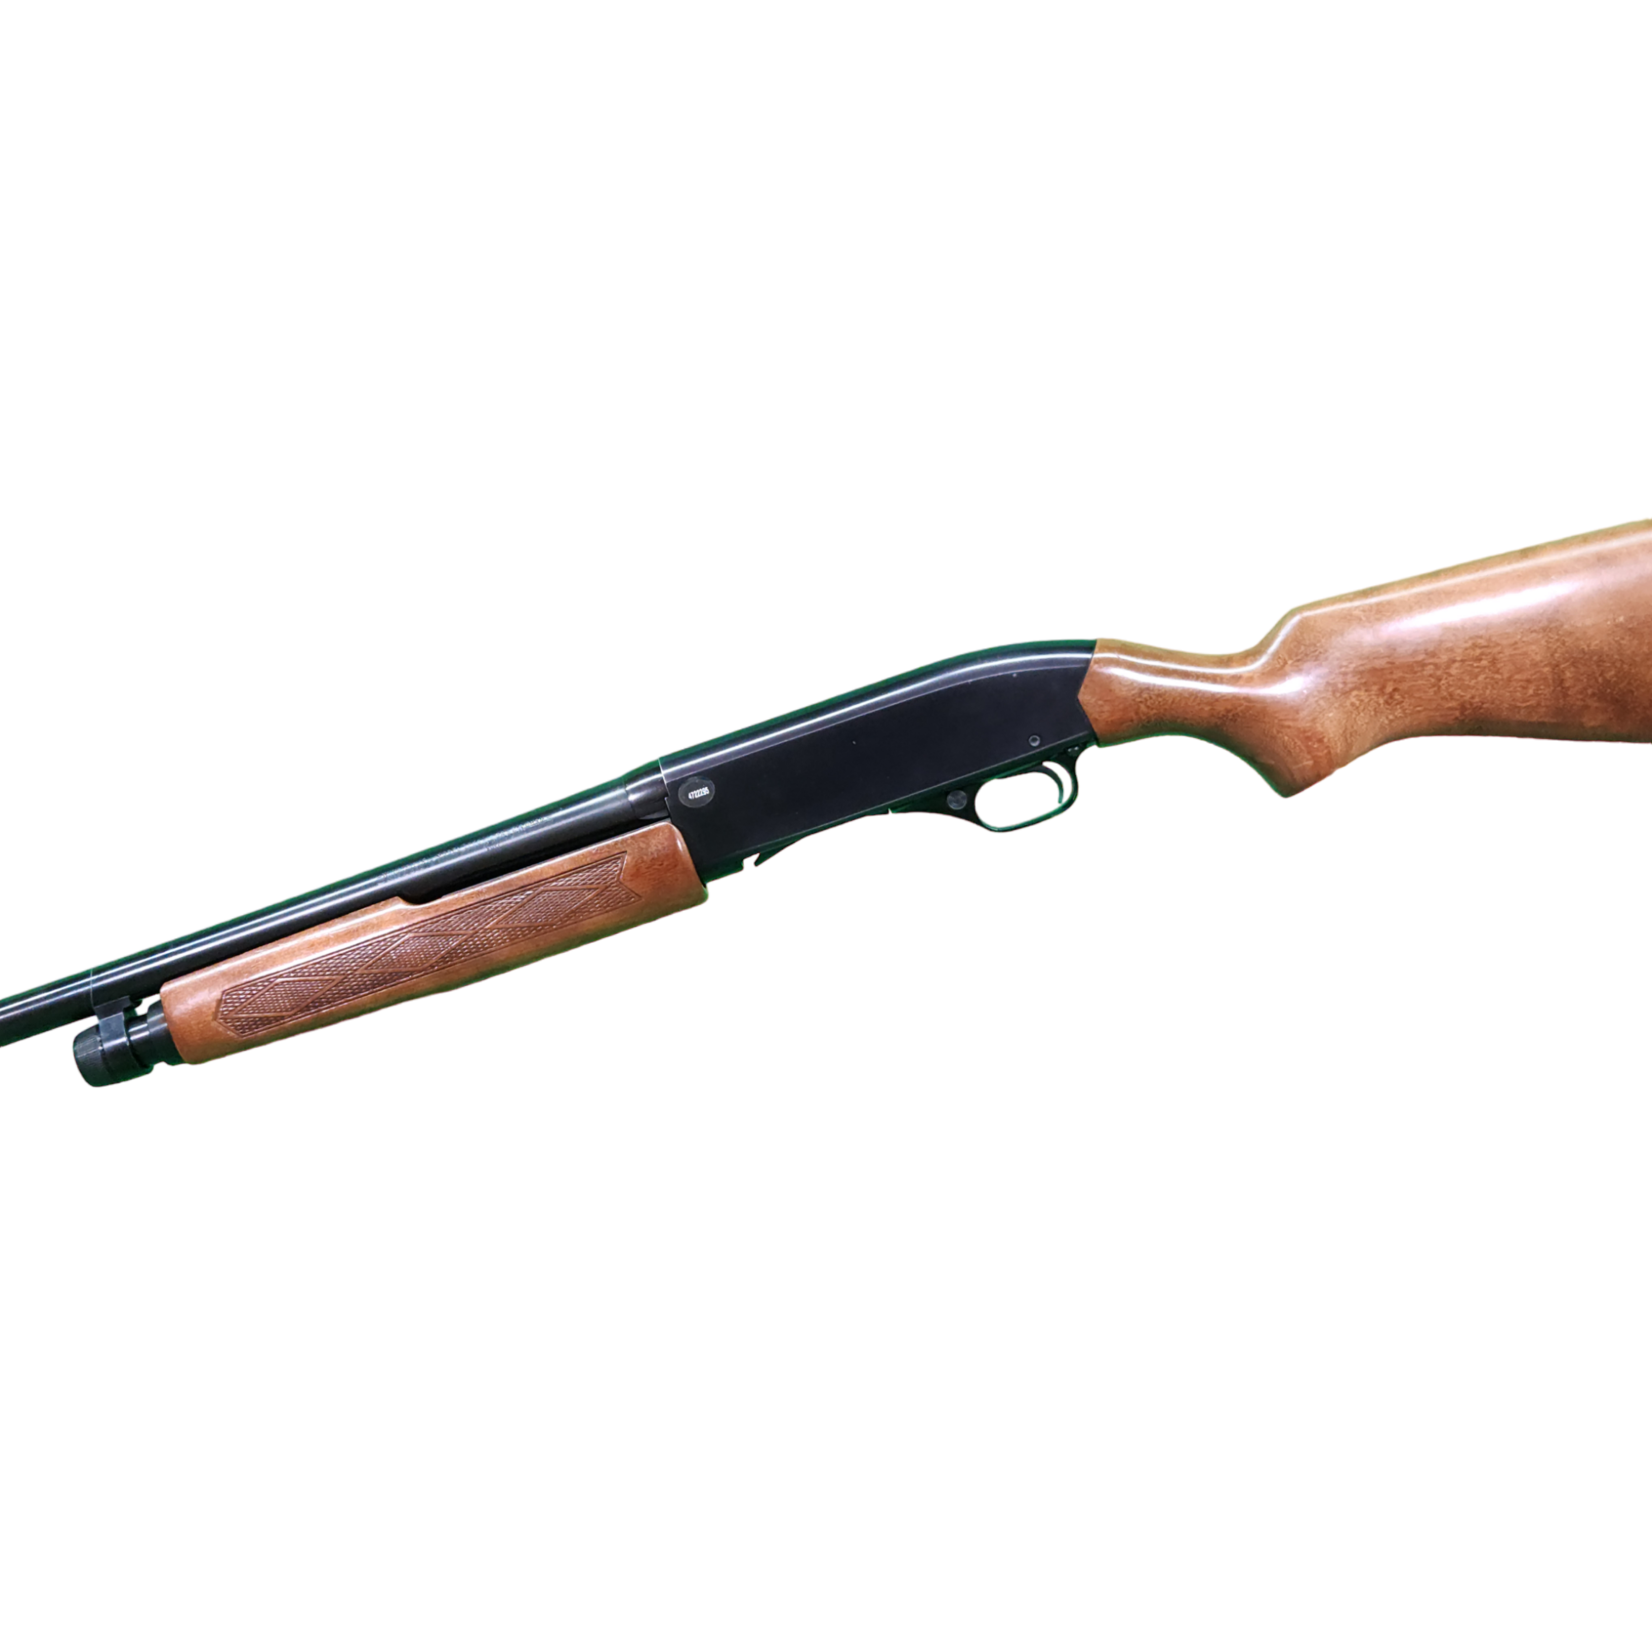 Fourreau à fusil Winchester 132 cm - Ducatillon